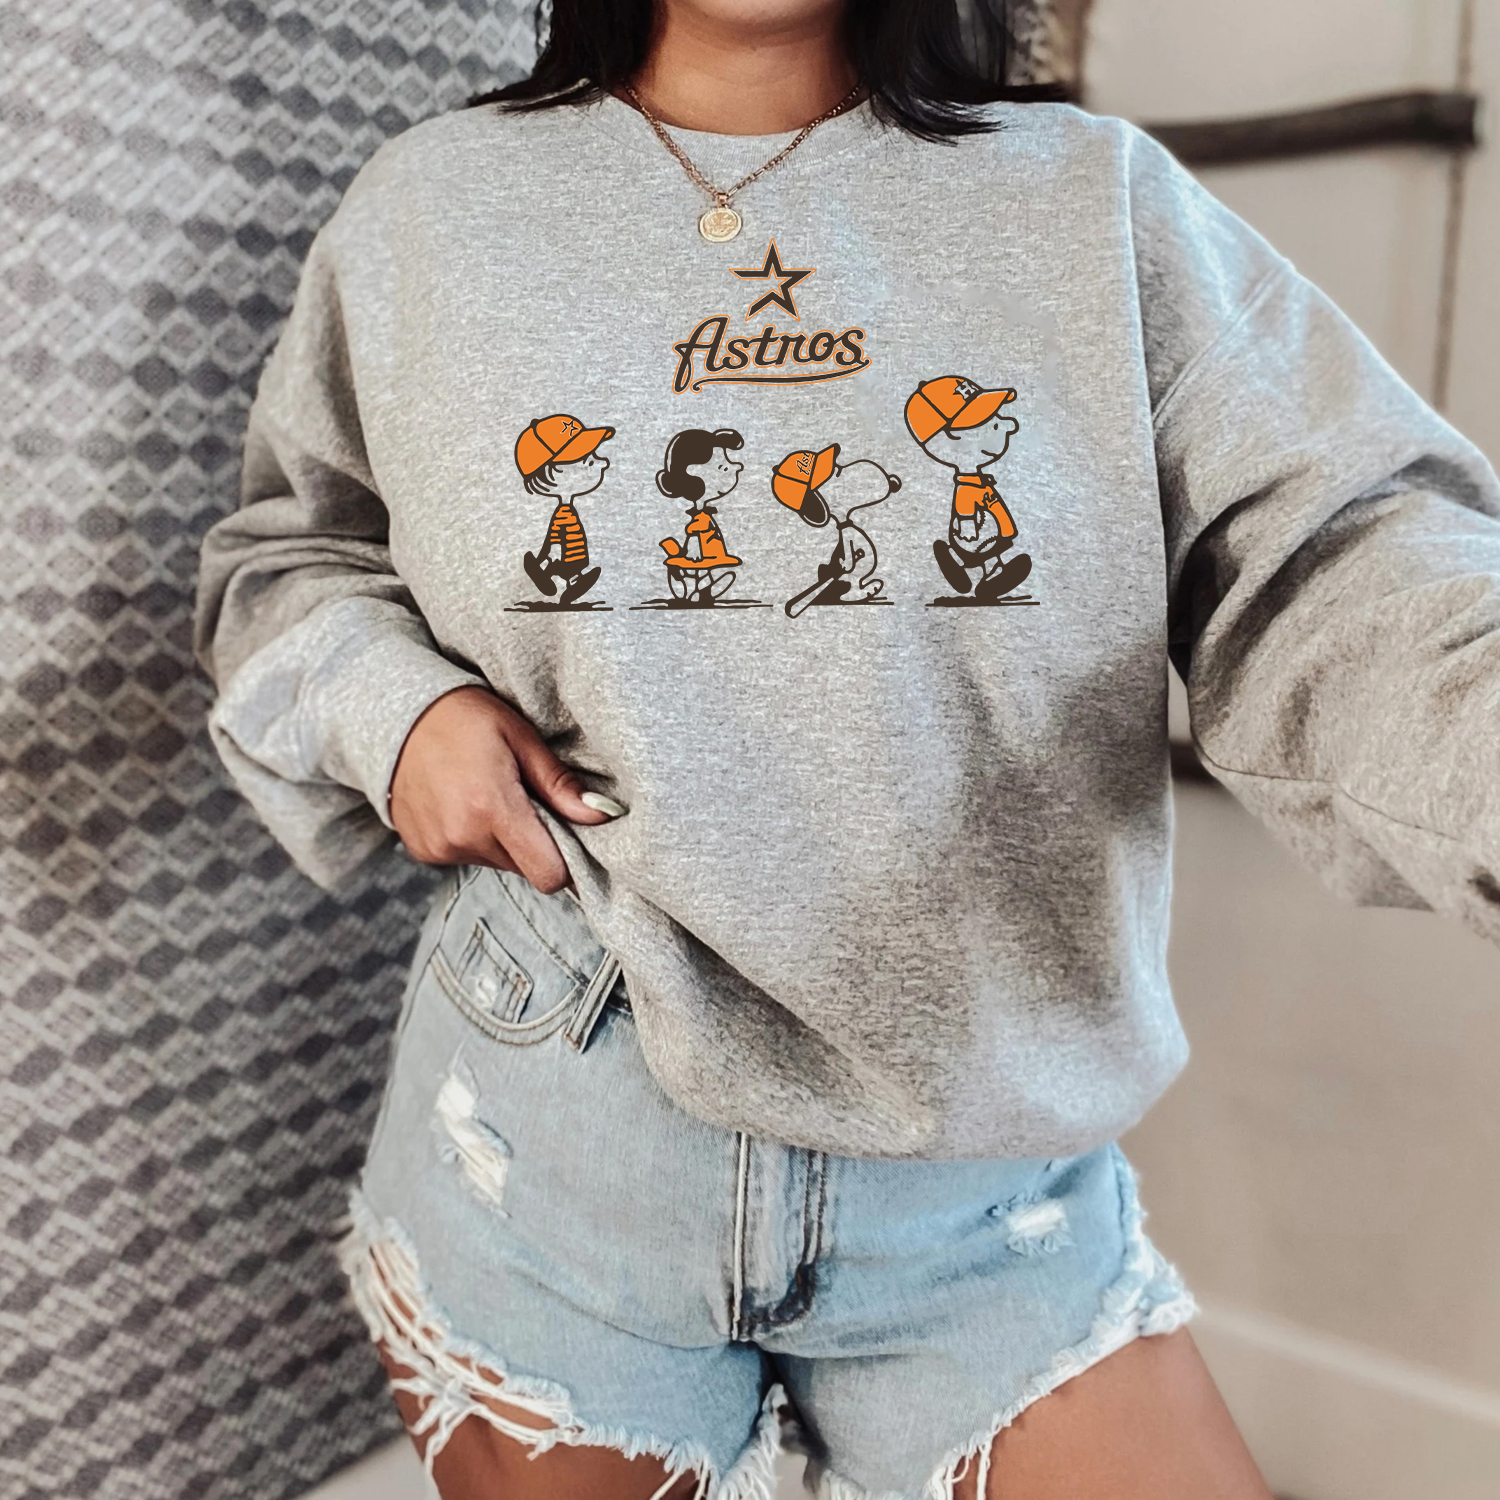 Houston Astros Snoopy Charlie Brown 2022 T-shirt, hoodie, sweater